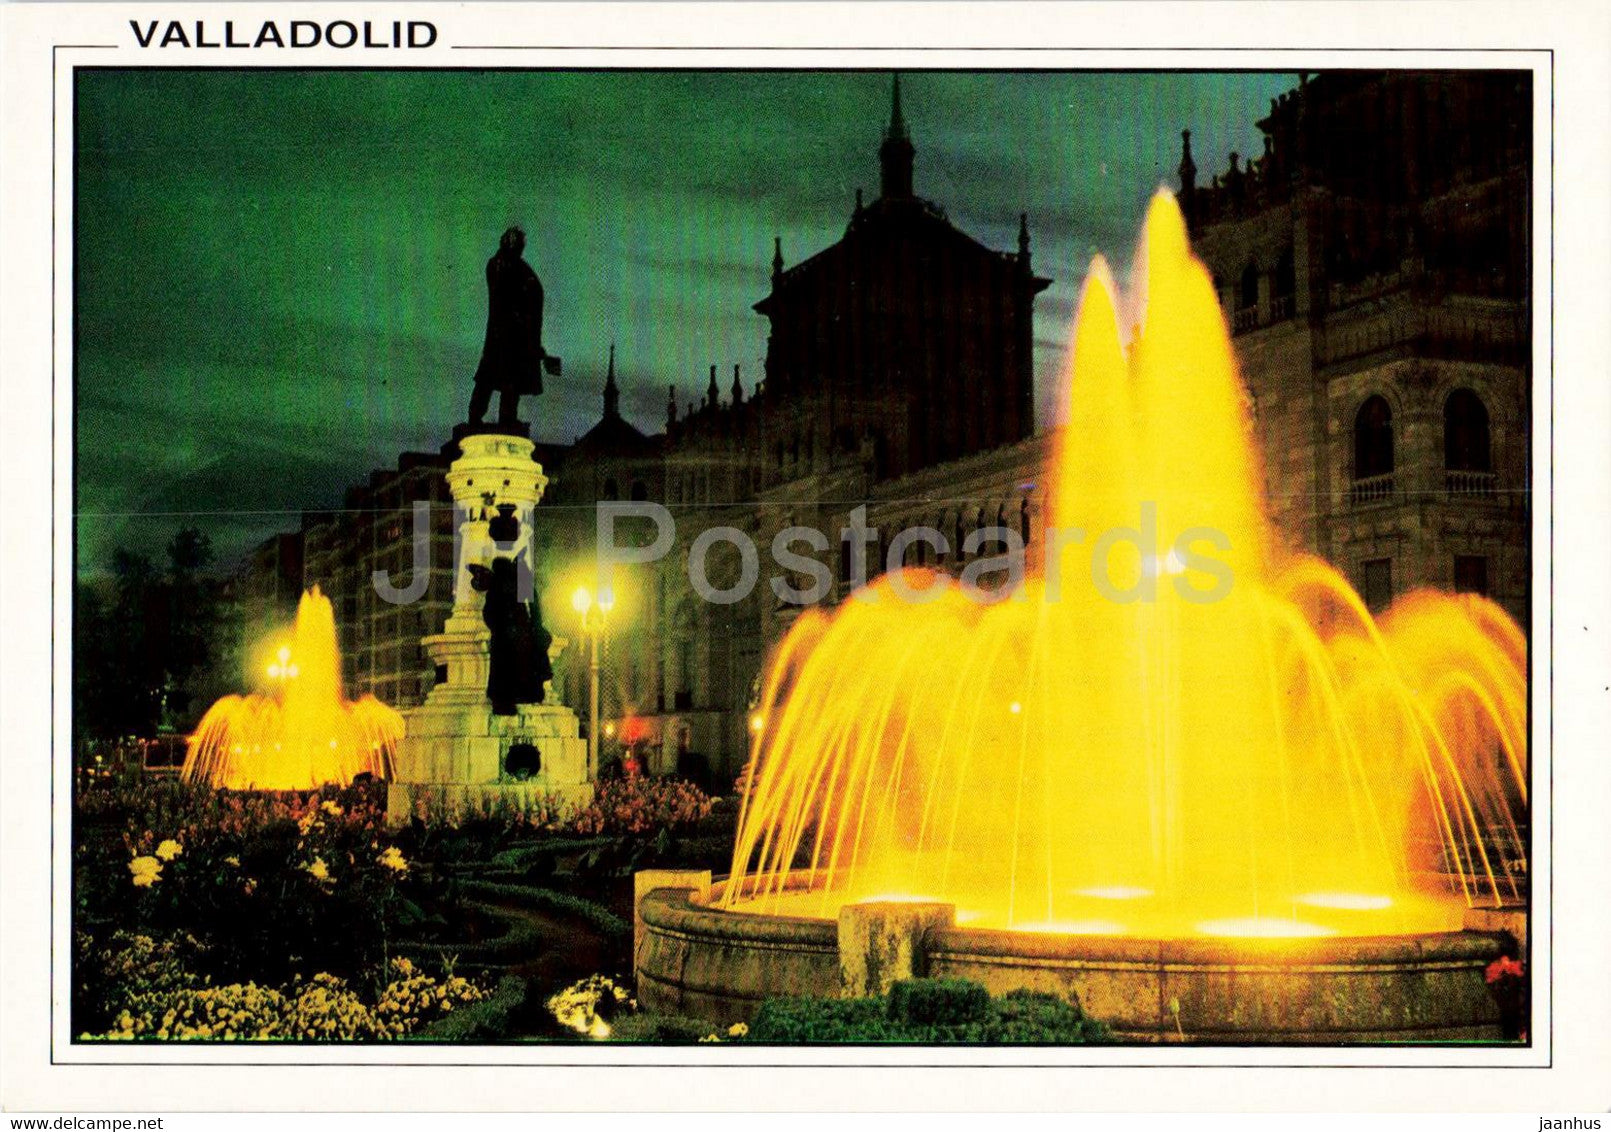 Valladolid - Estatua de Zorrilla y Fuente Luminosa - Zorrilla statue and Illuminated fountain - Spain - unused - JH Postcards